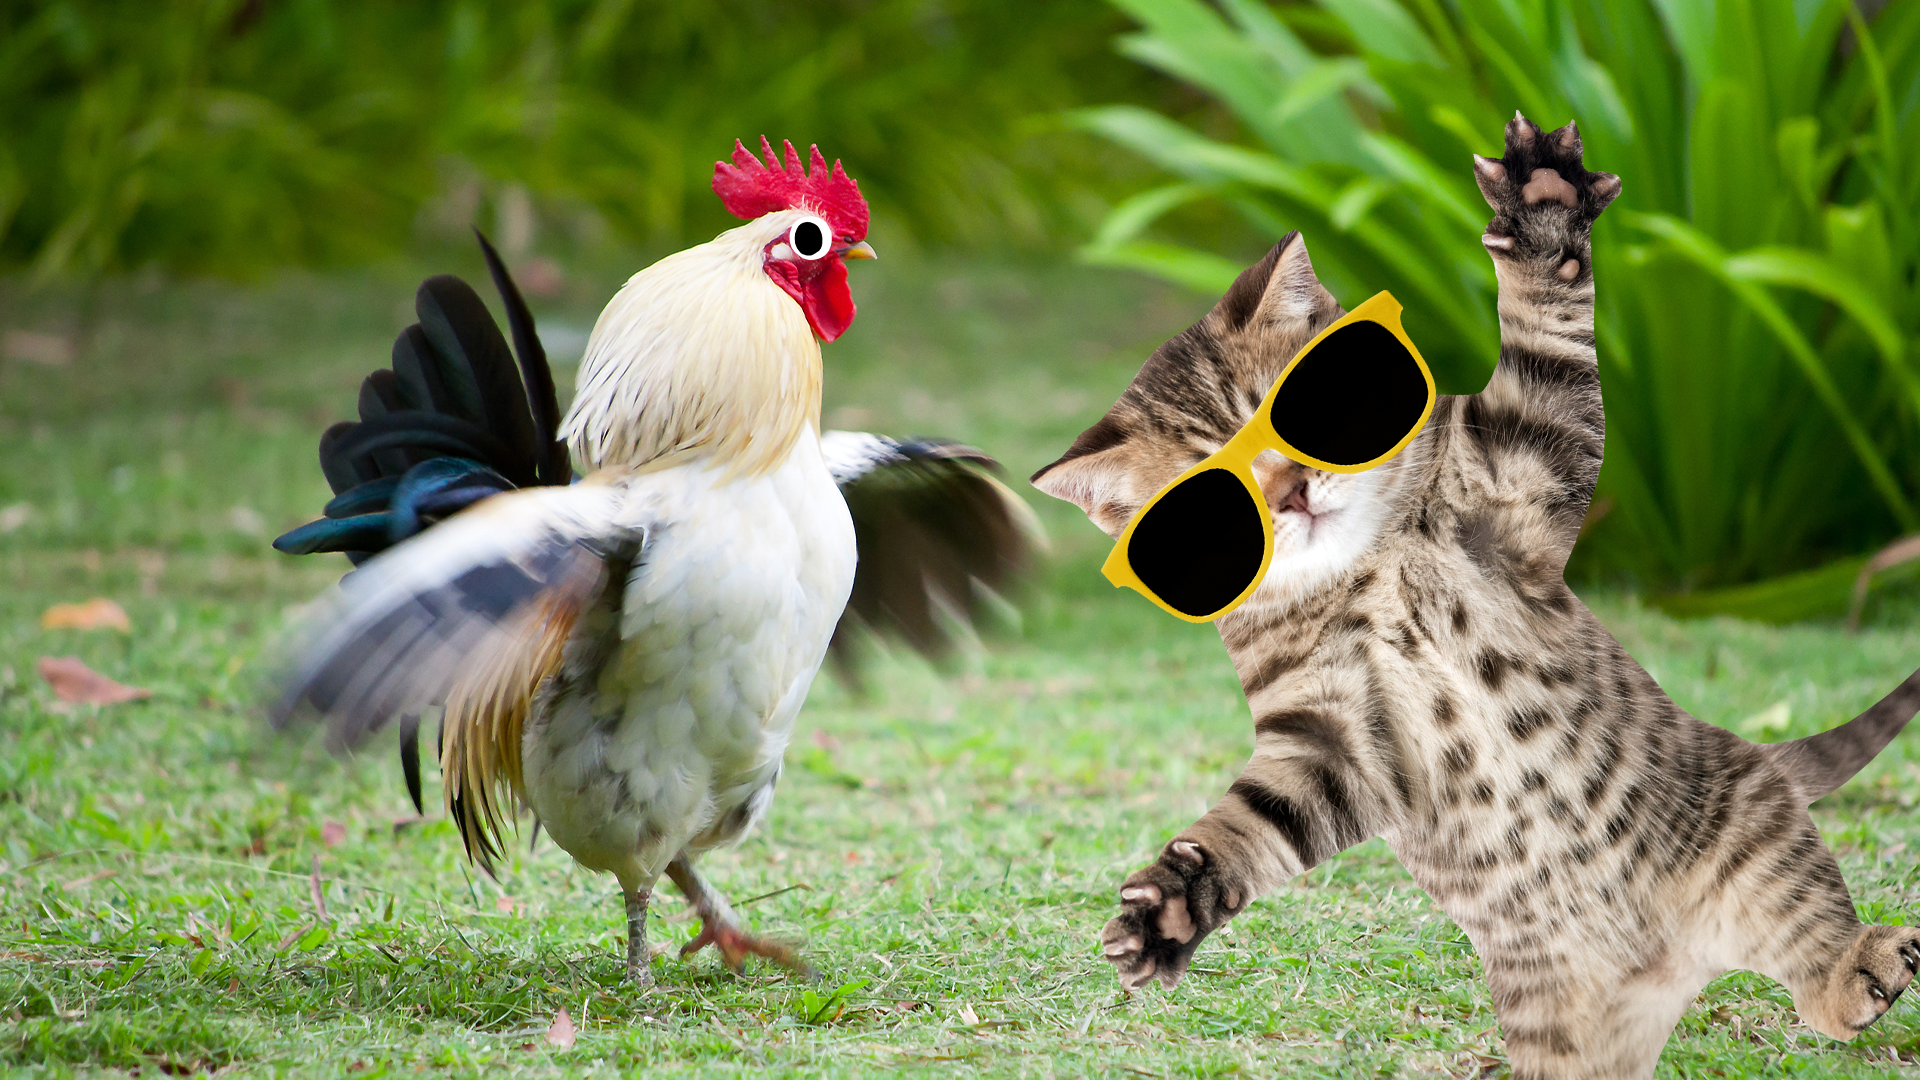 Kitten and chicken dancing